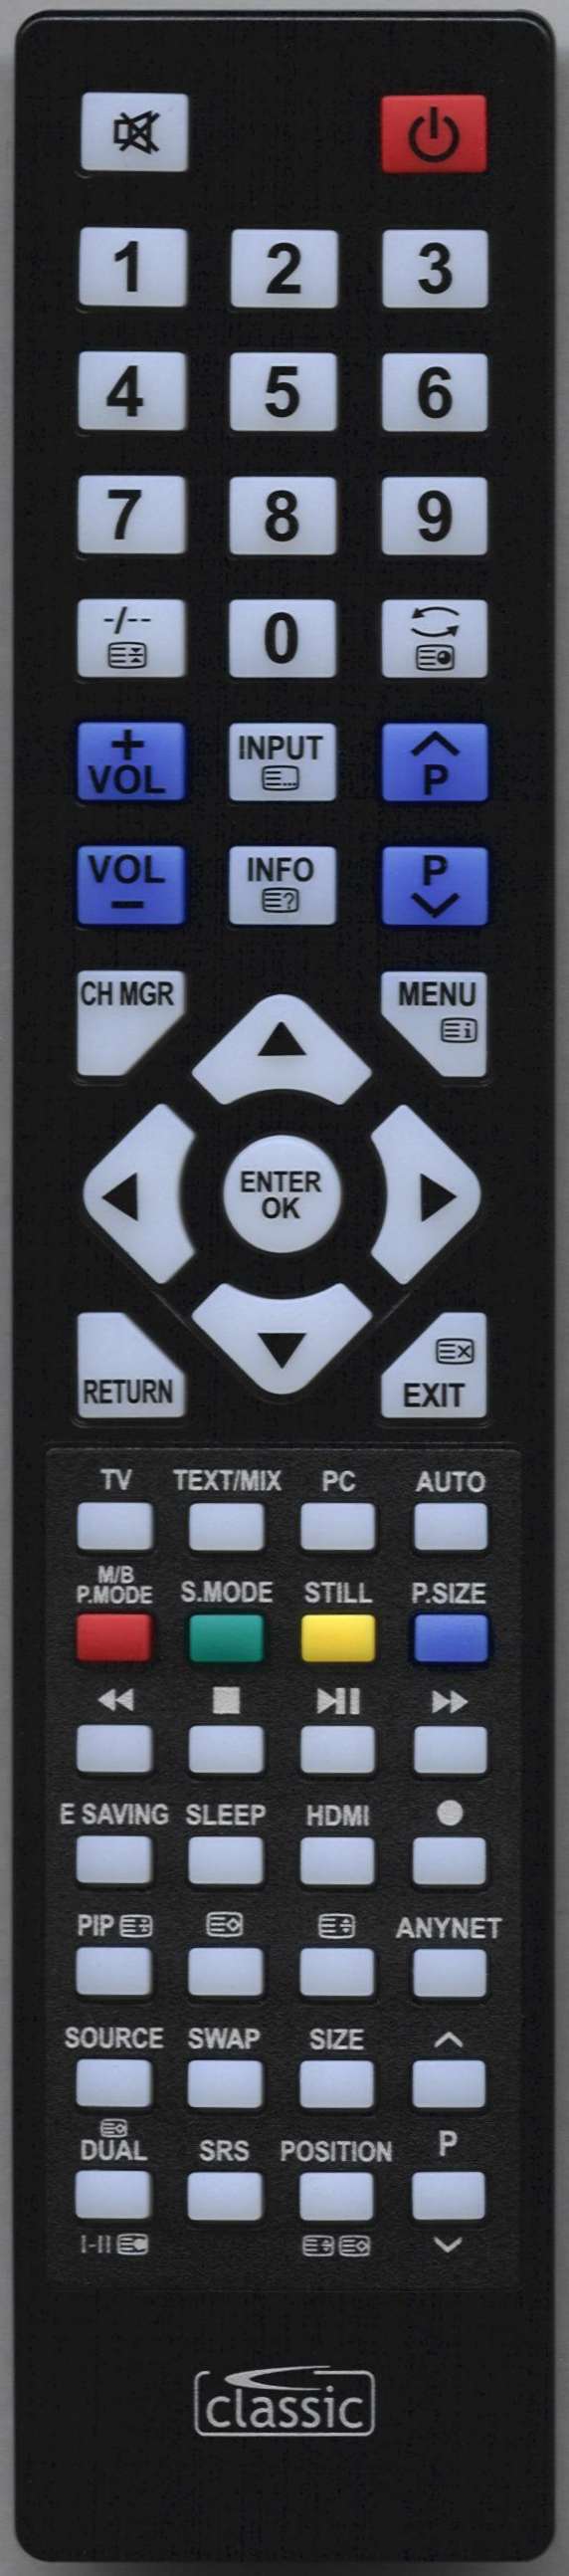 SAMSUNG LA40N81BX/RAD Remote Control